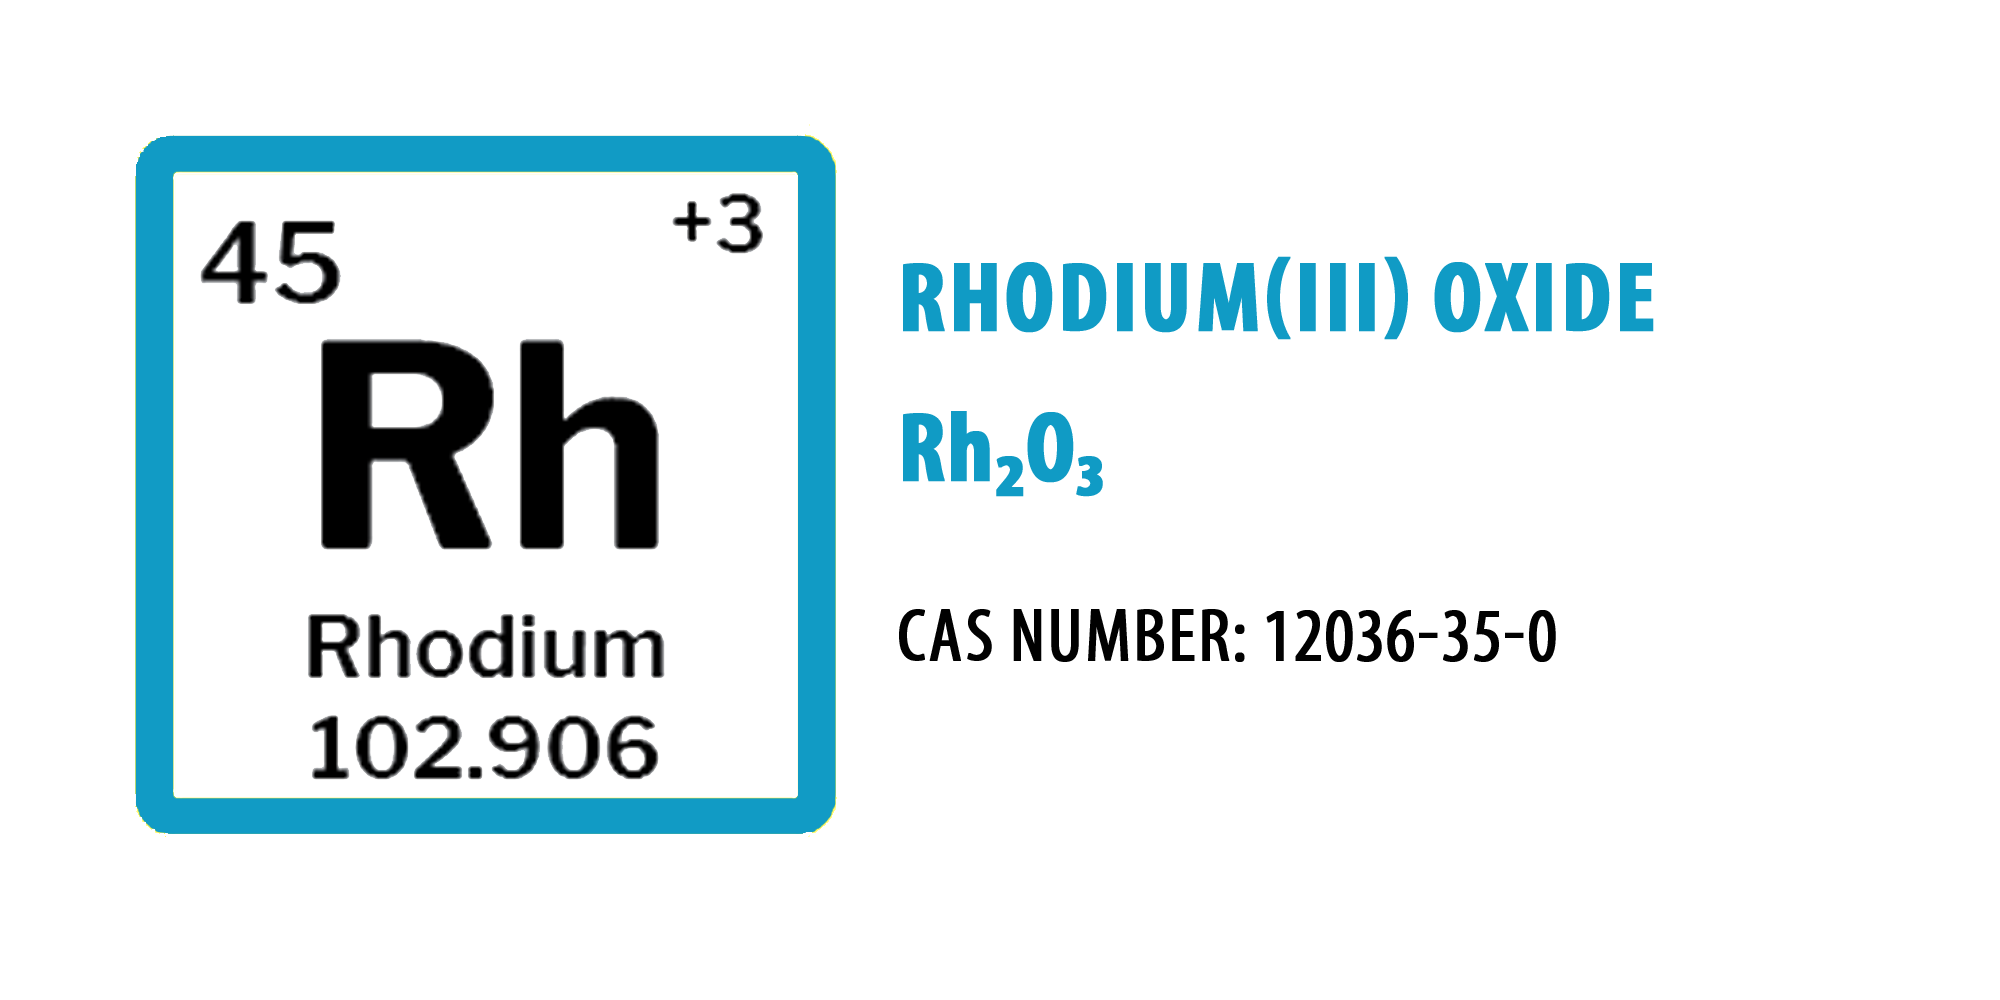 RHODIUM(III) OXIDE